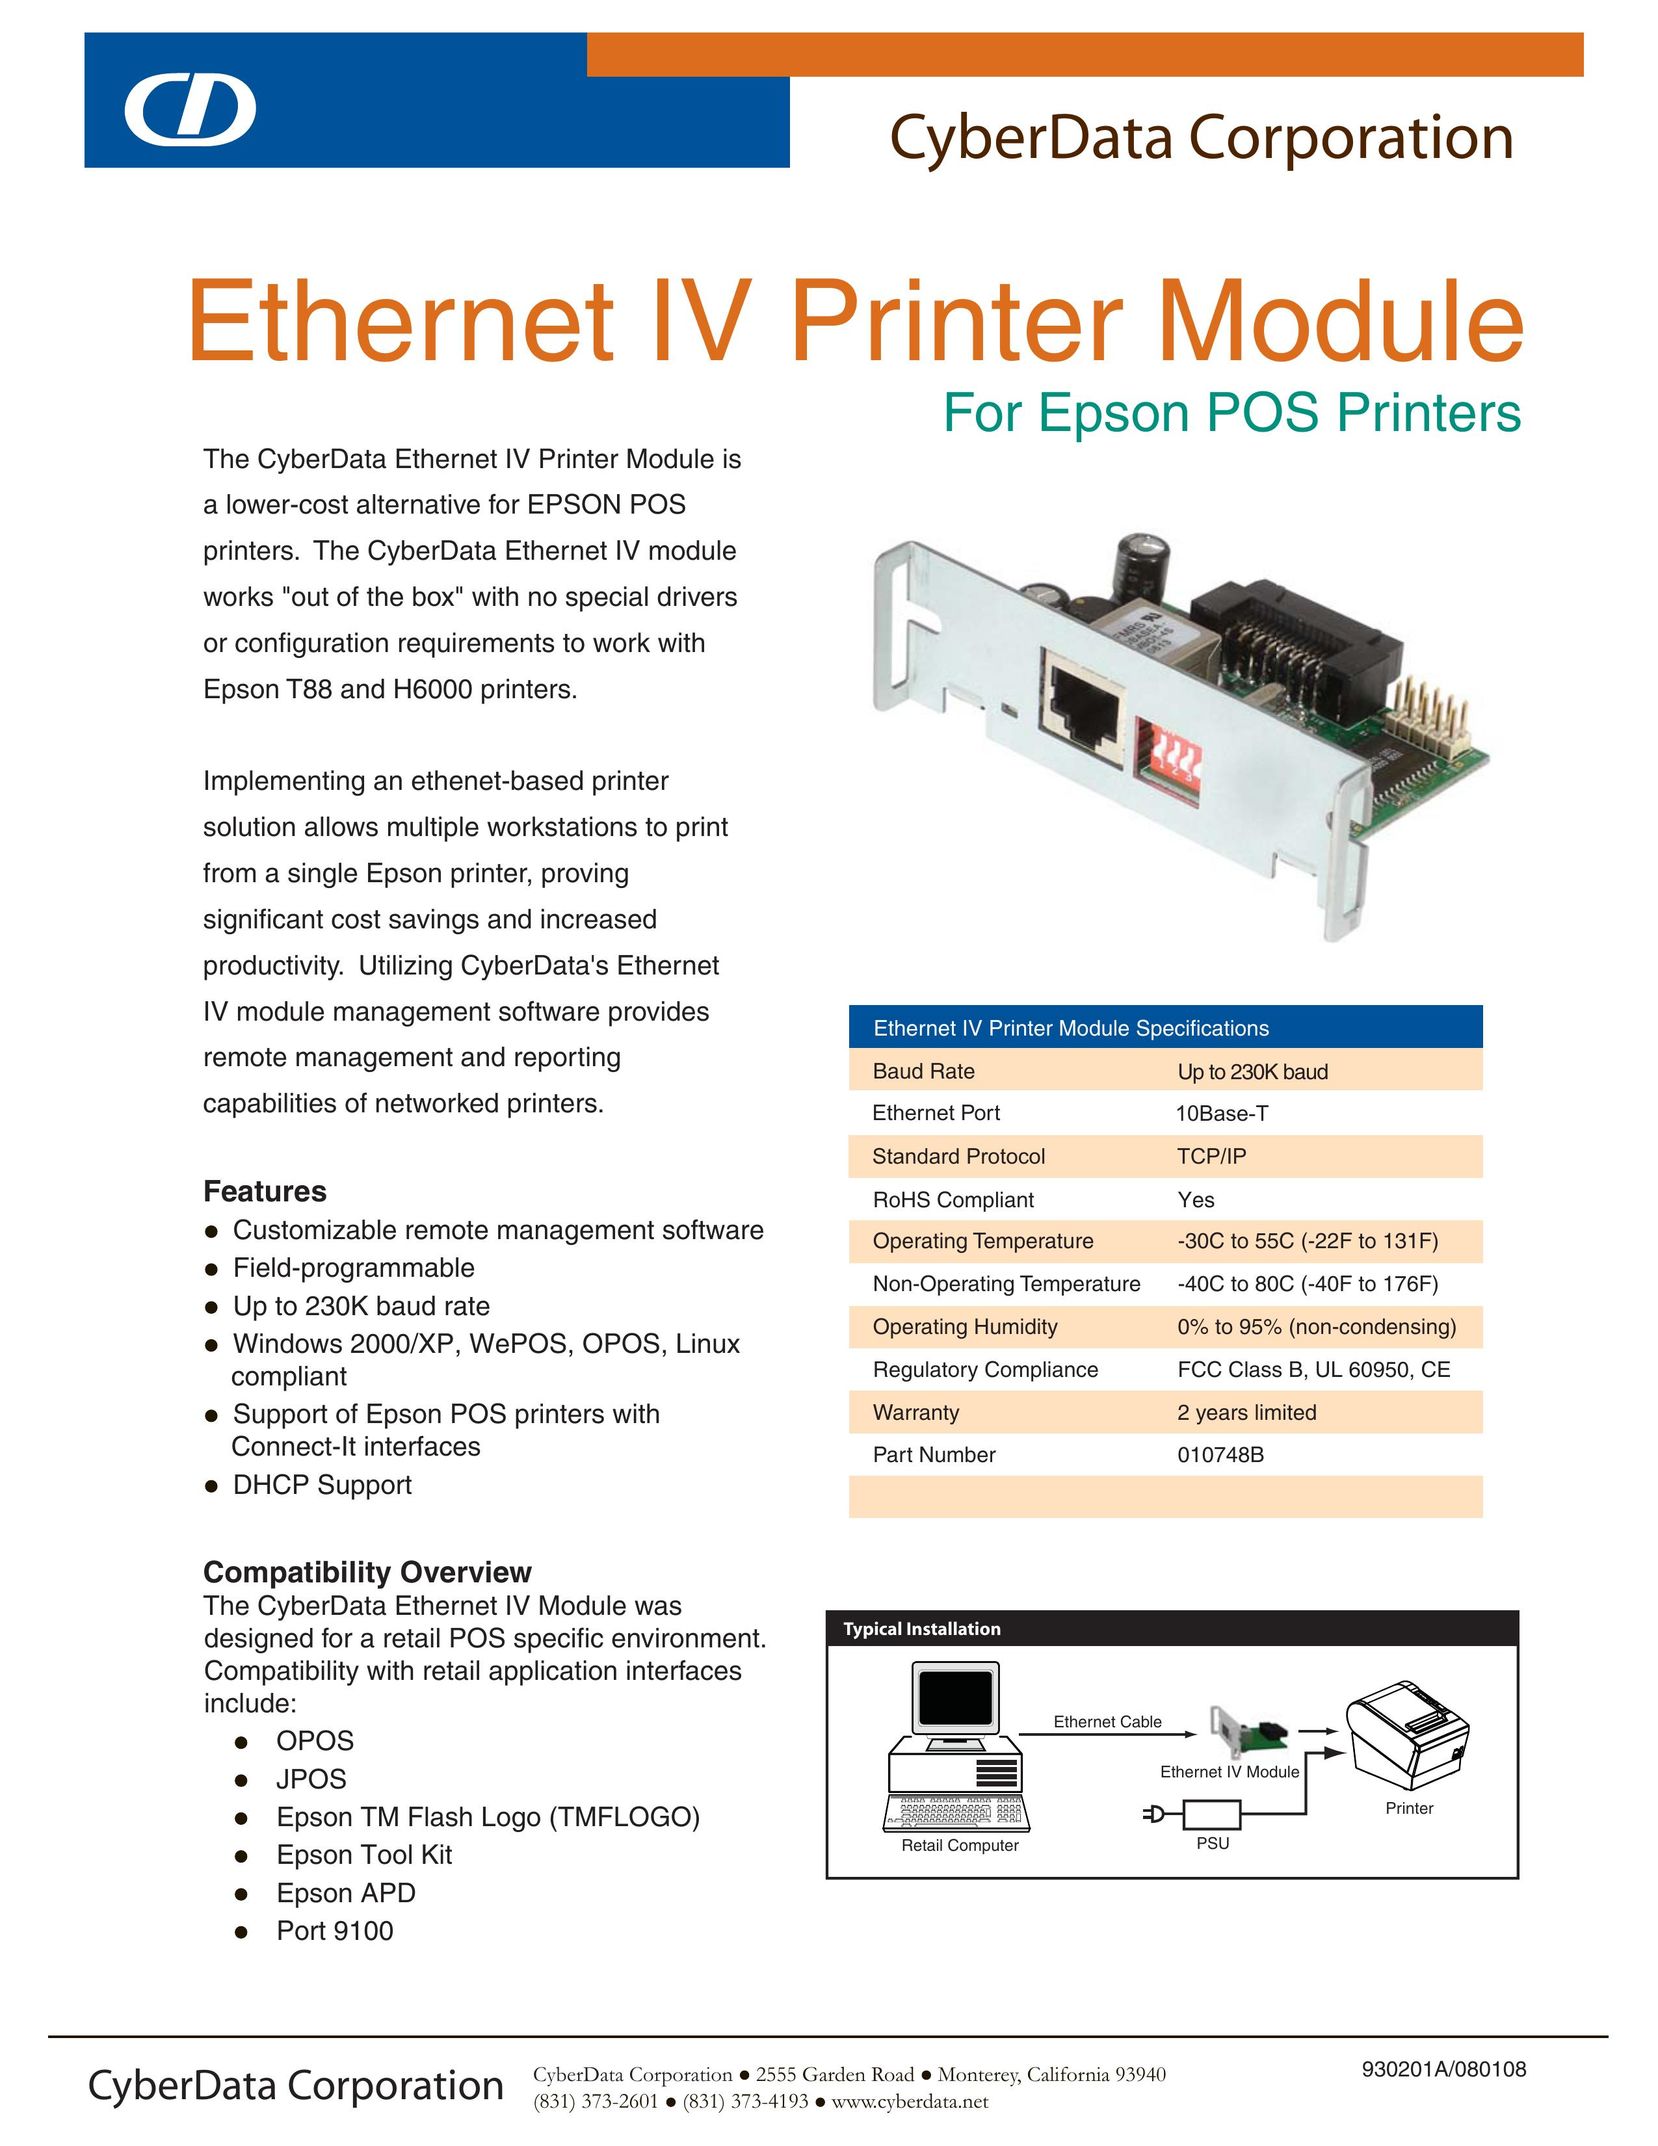 CyberData Ethernet IV Printer Module Network Card User Manual